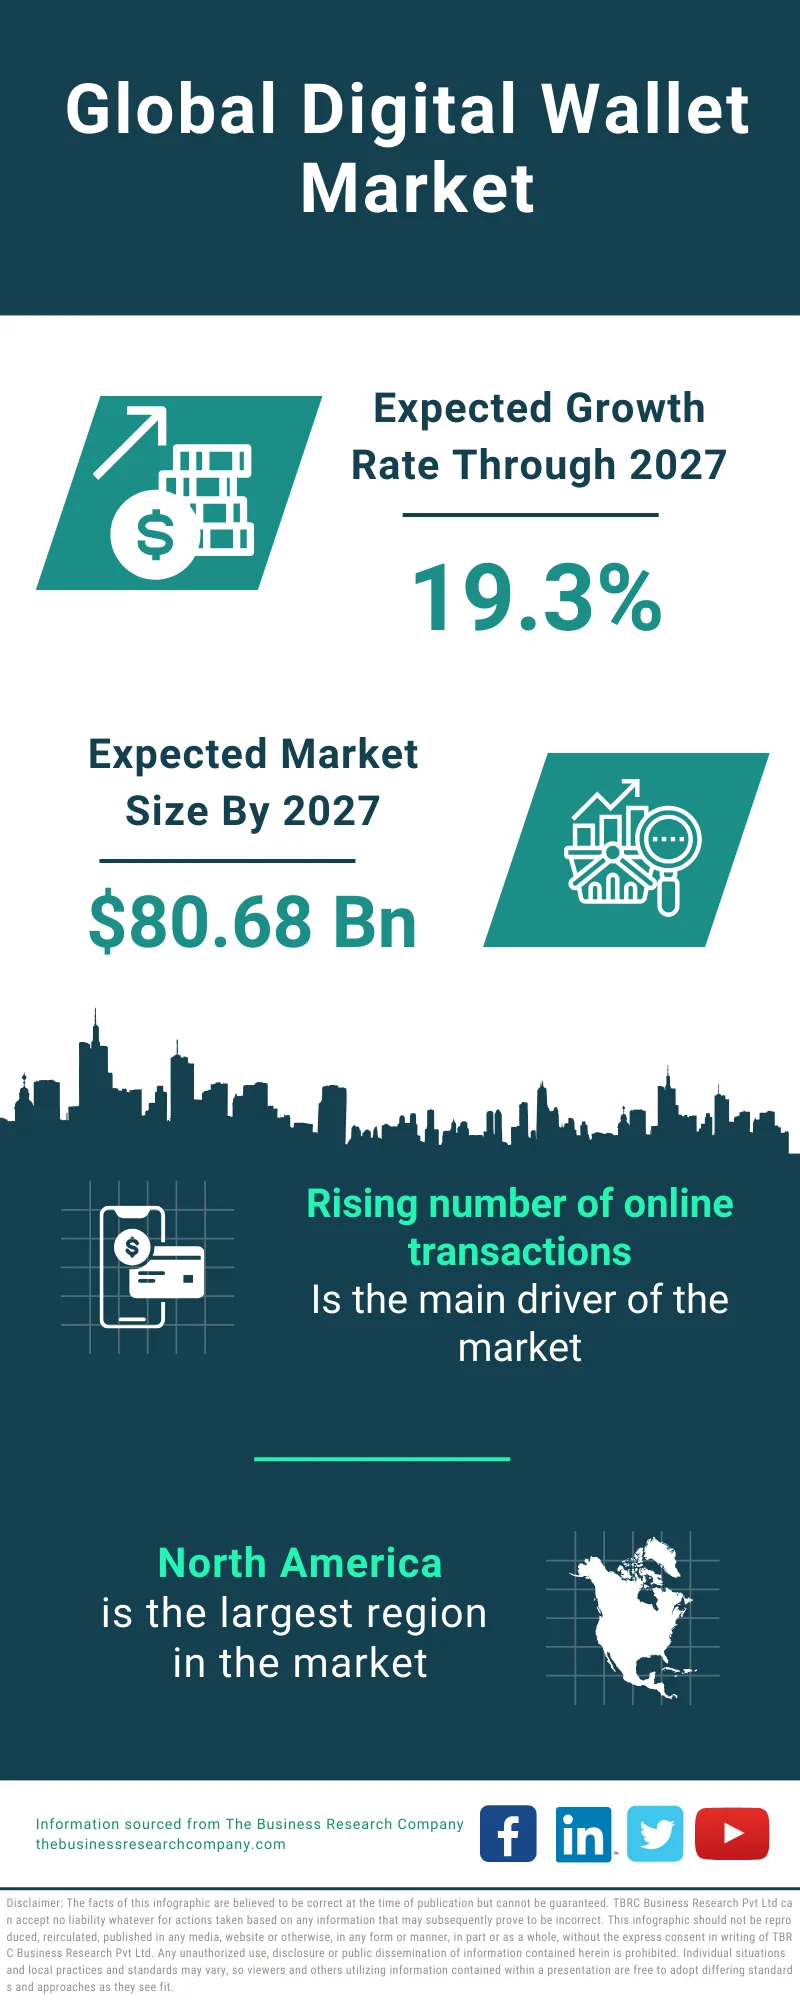 Digital Wallet Global Market Report 2023